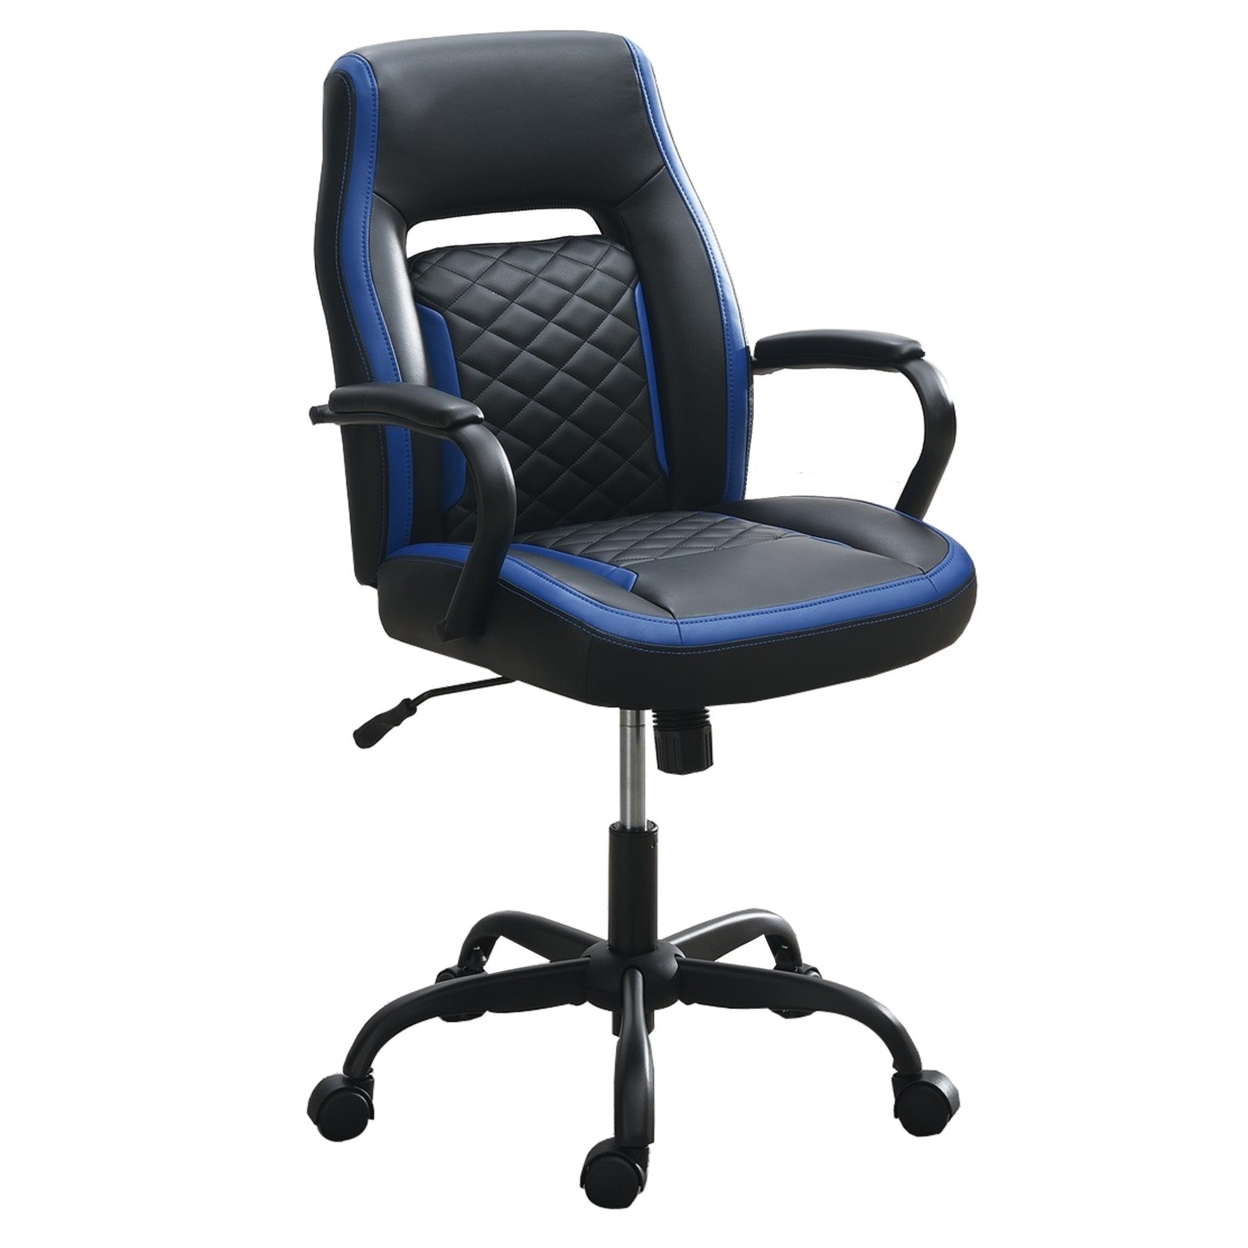 Ida 26 Inch Ergonomic Office Chair, Faux Leather Swivel Seat, Black, Blue- Saltoro Sherpi